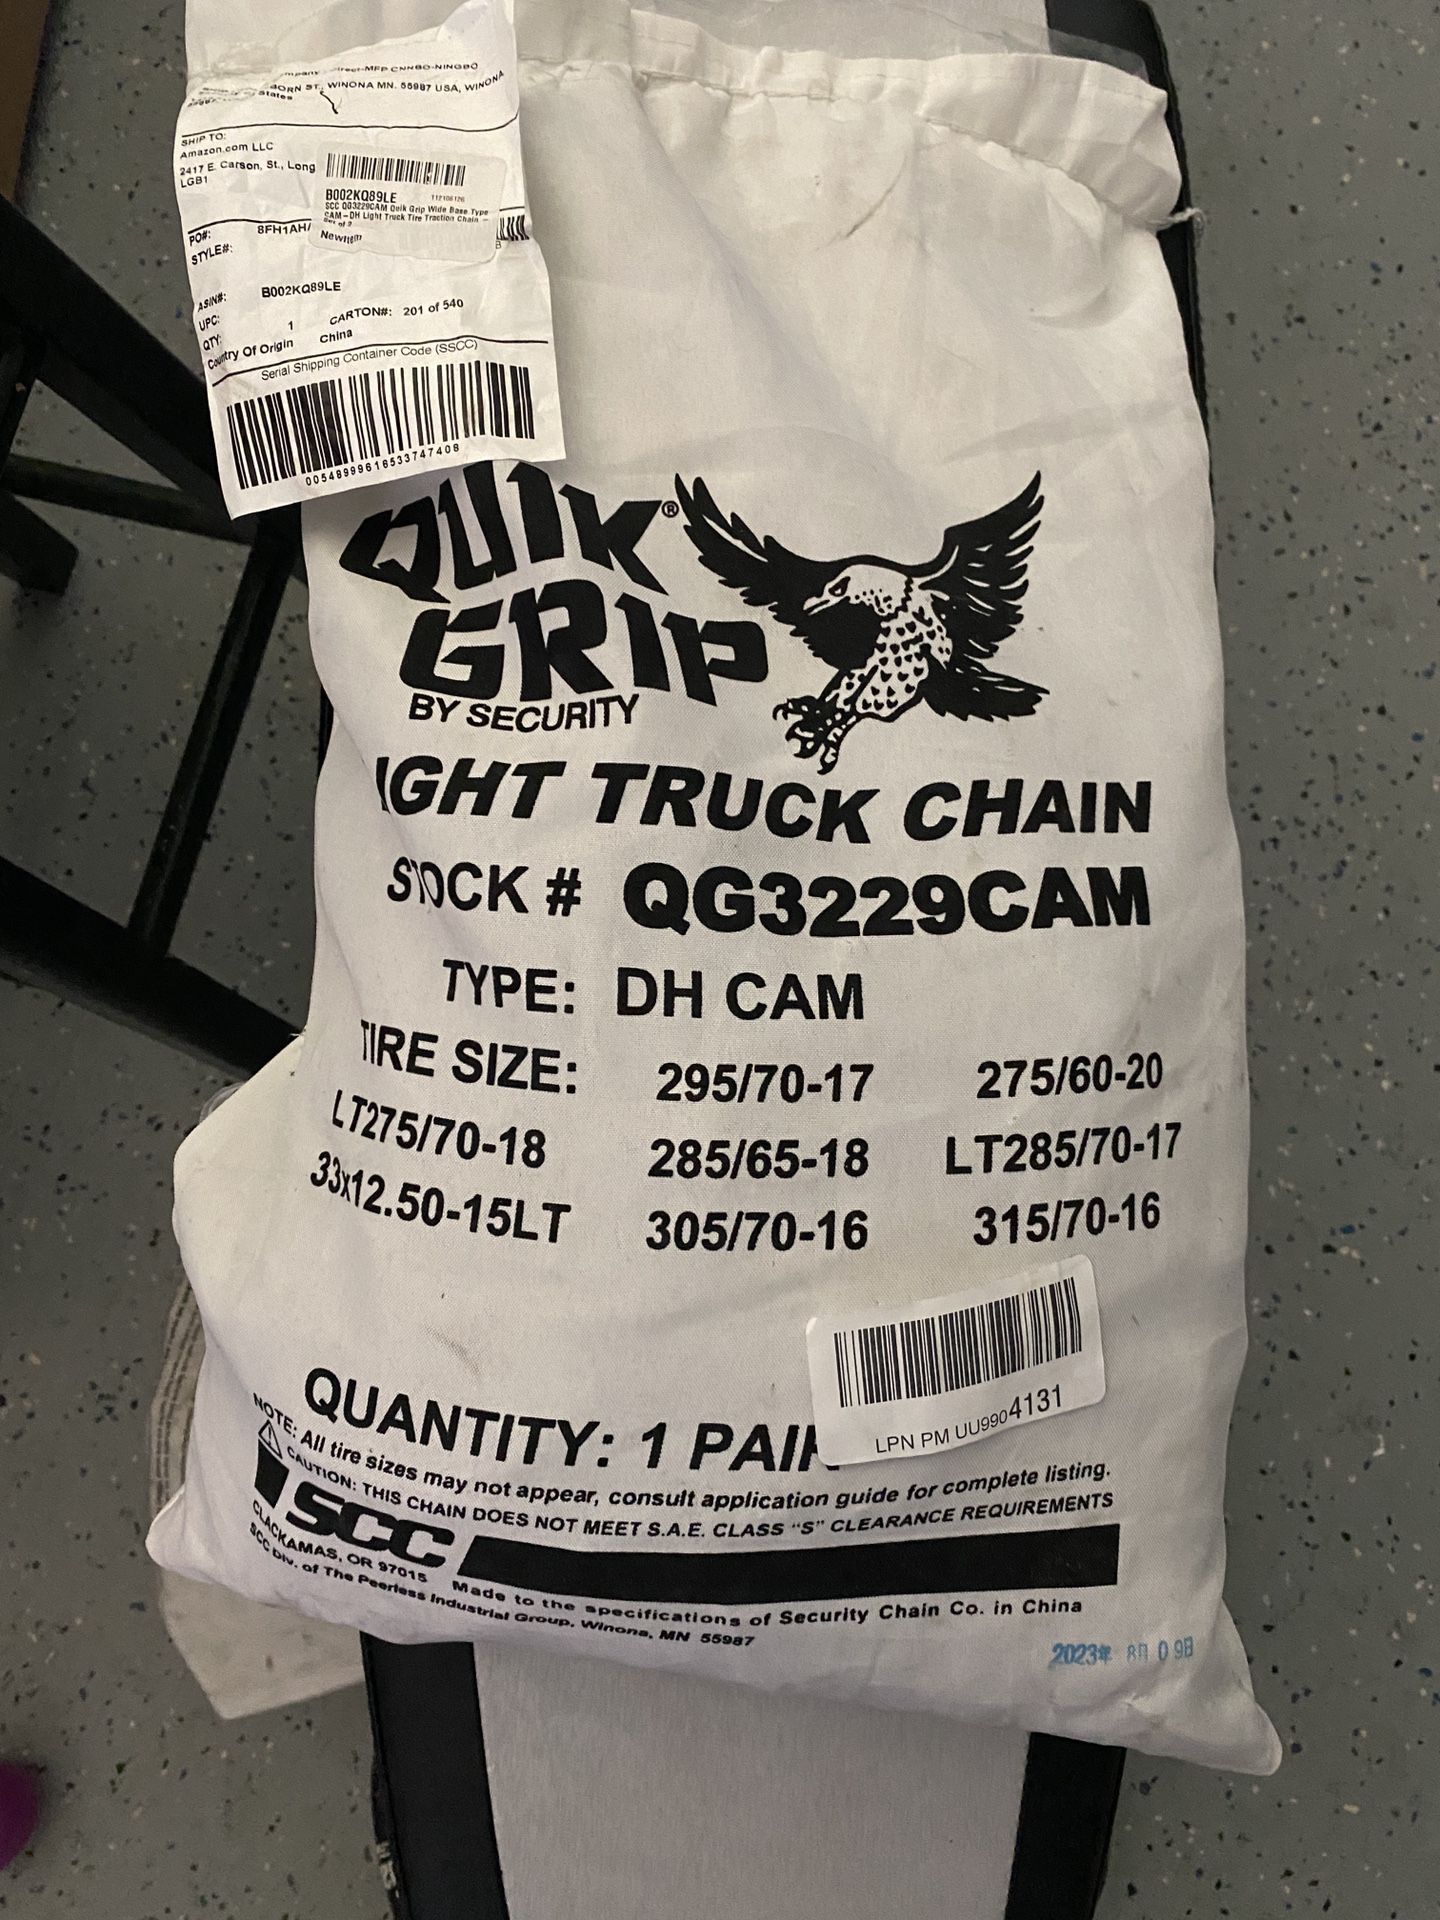 Truck Chains - Pairs (New)